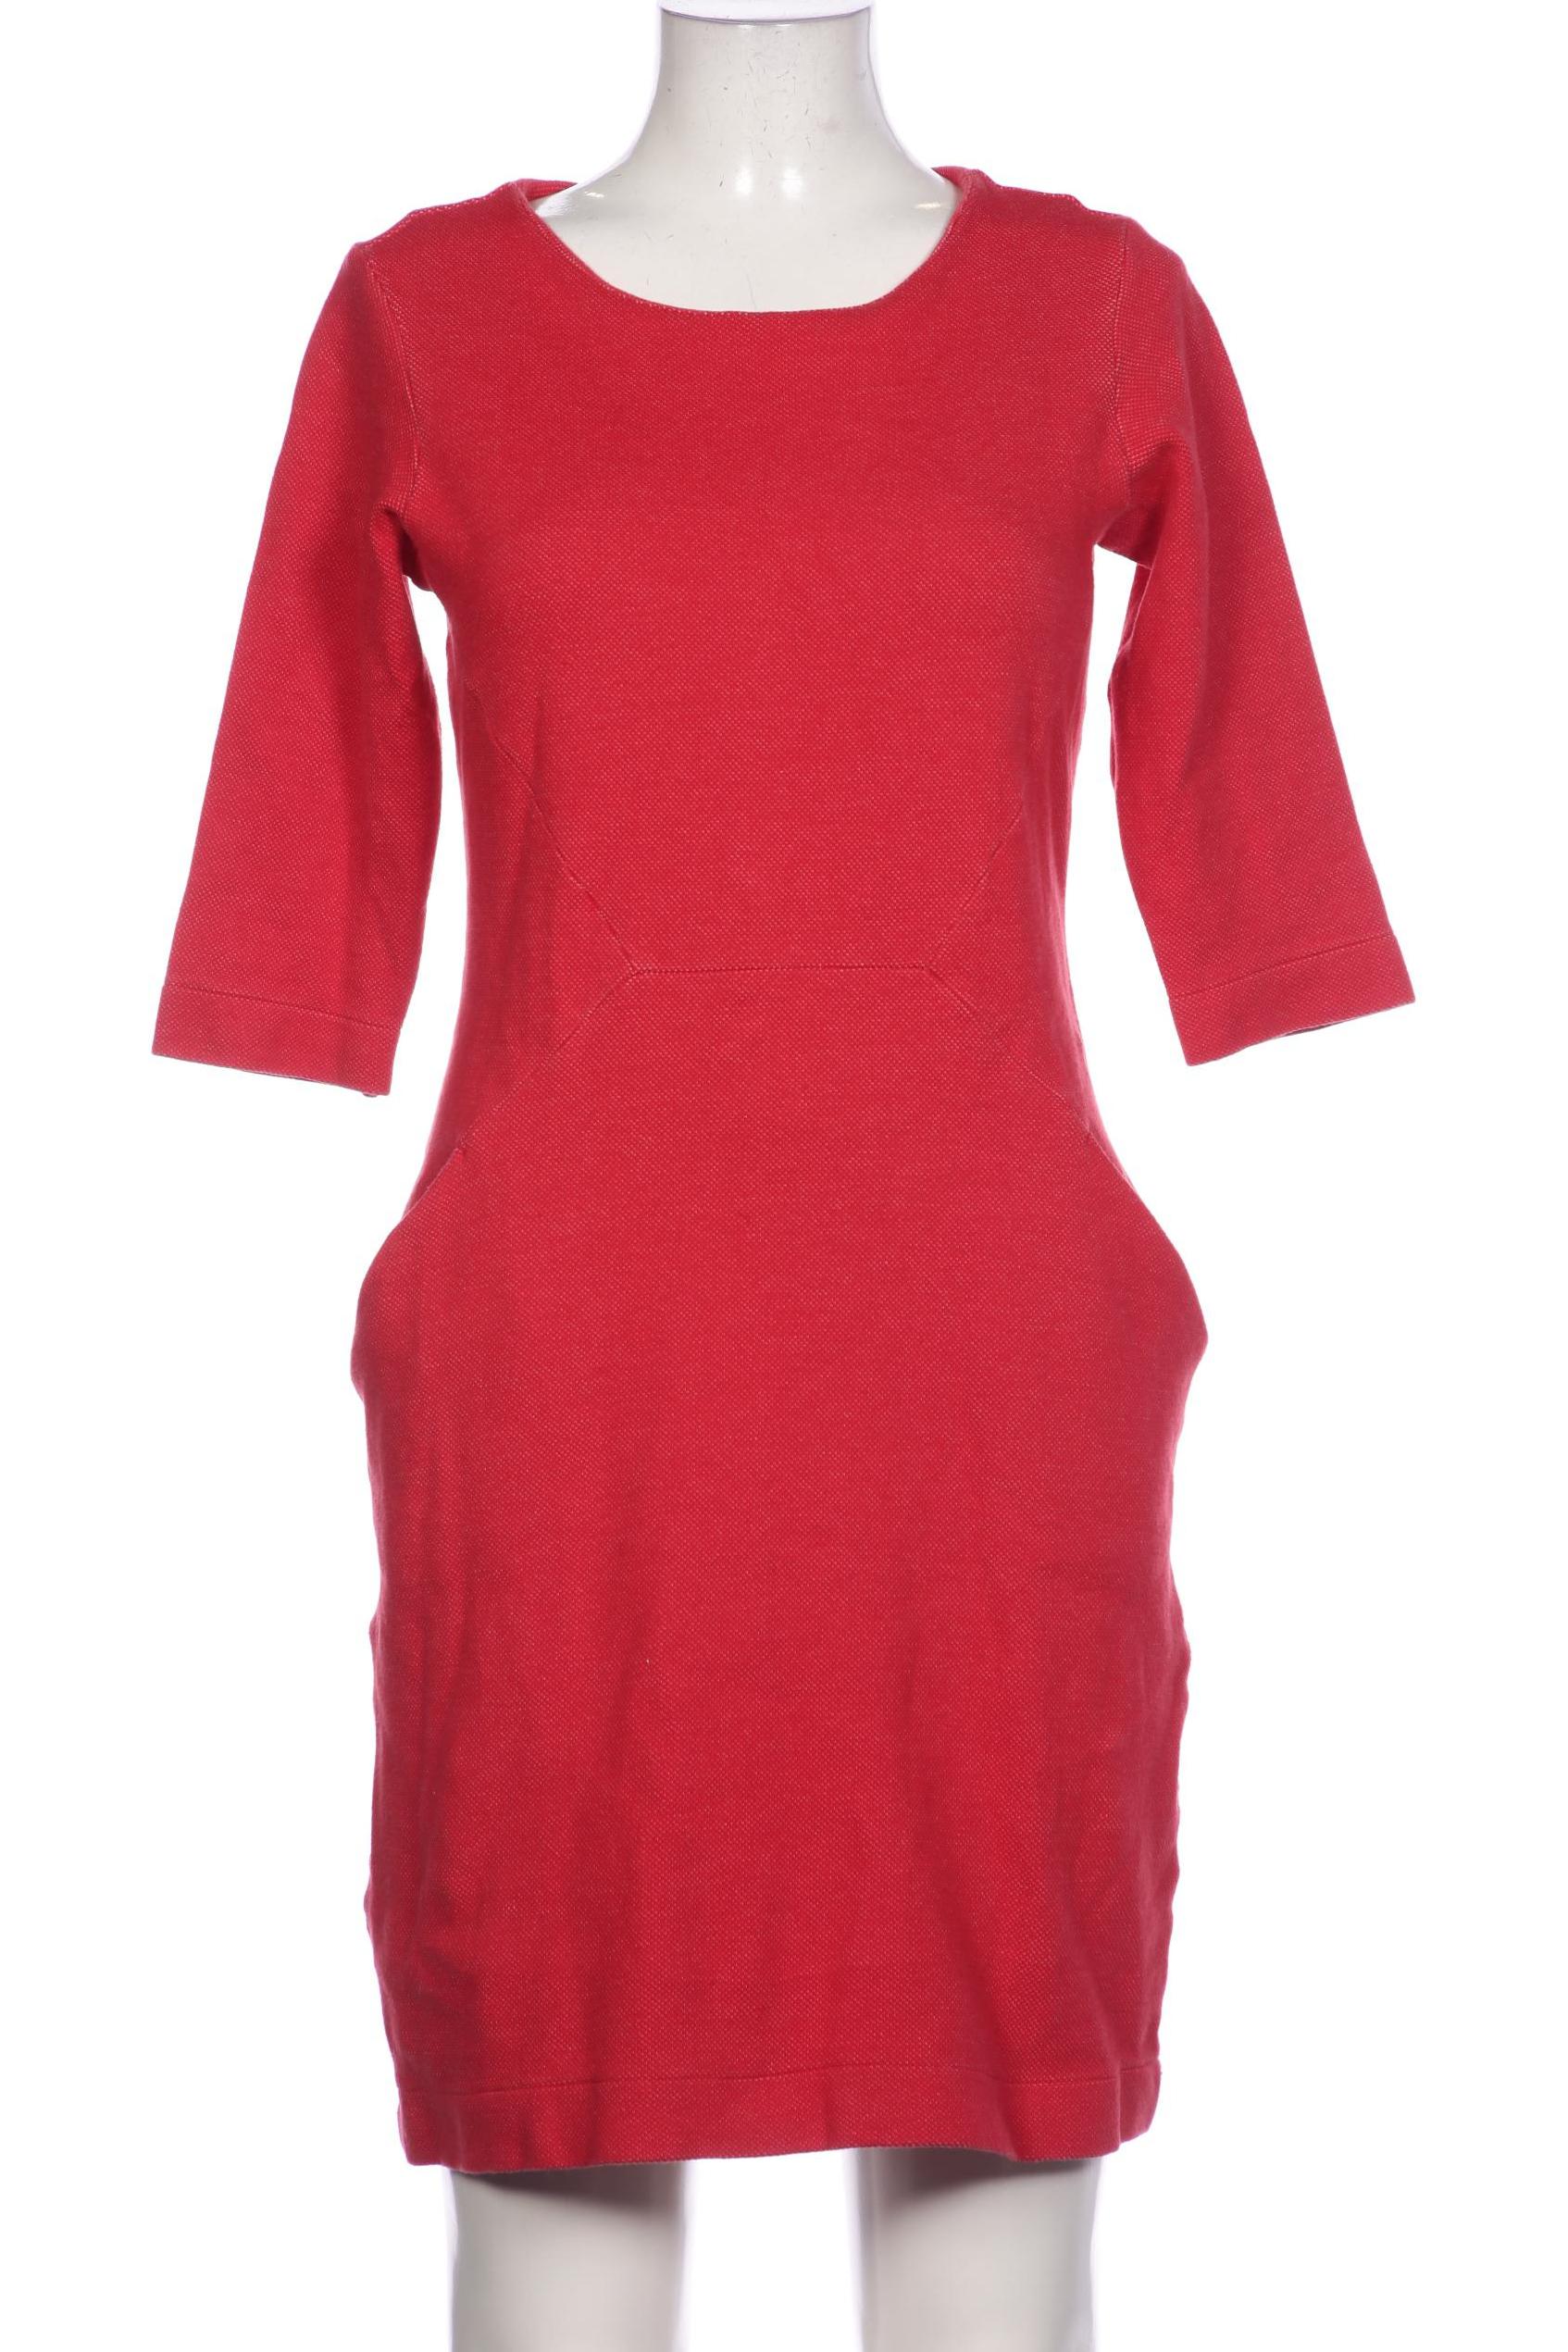 Lanius Damen Kleid, rot, Gr. 40 von LANIUS